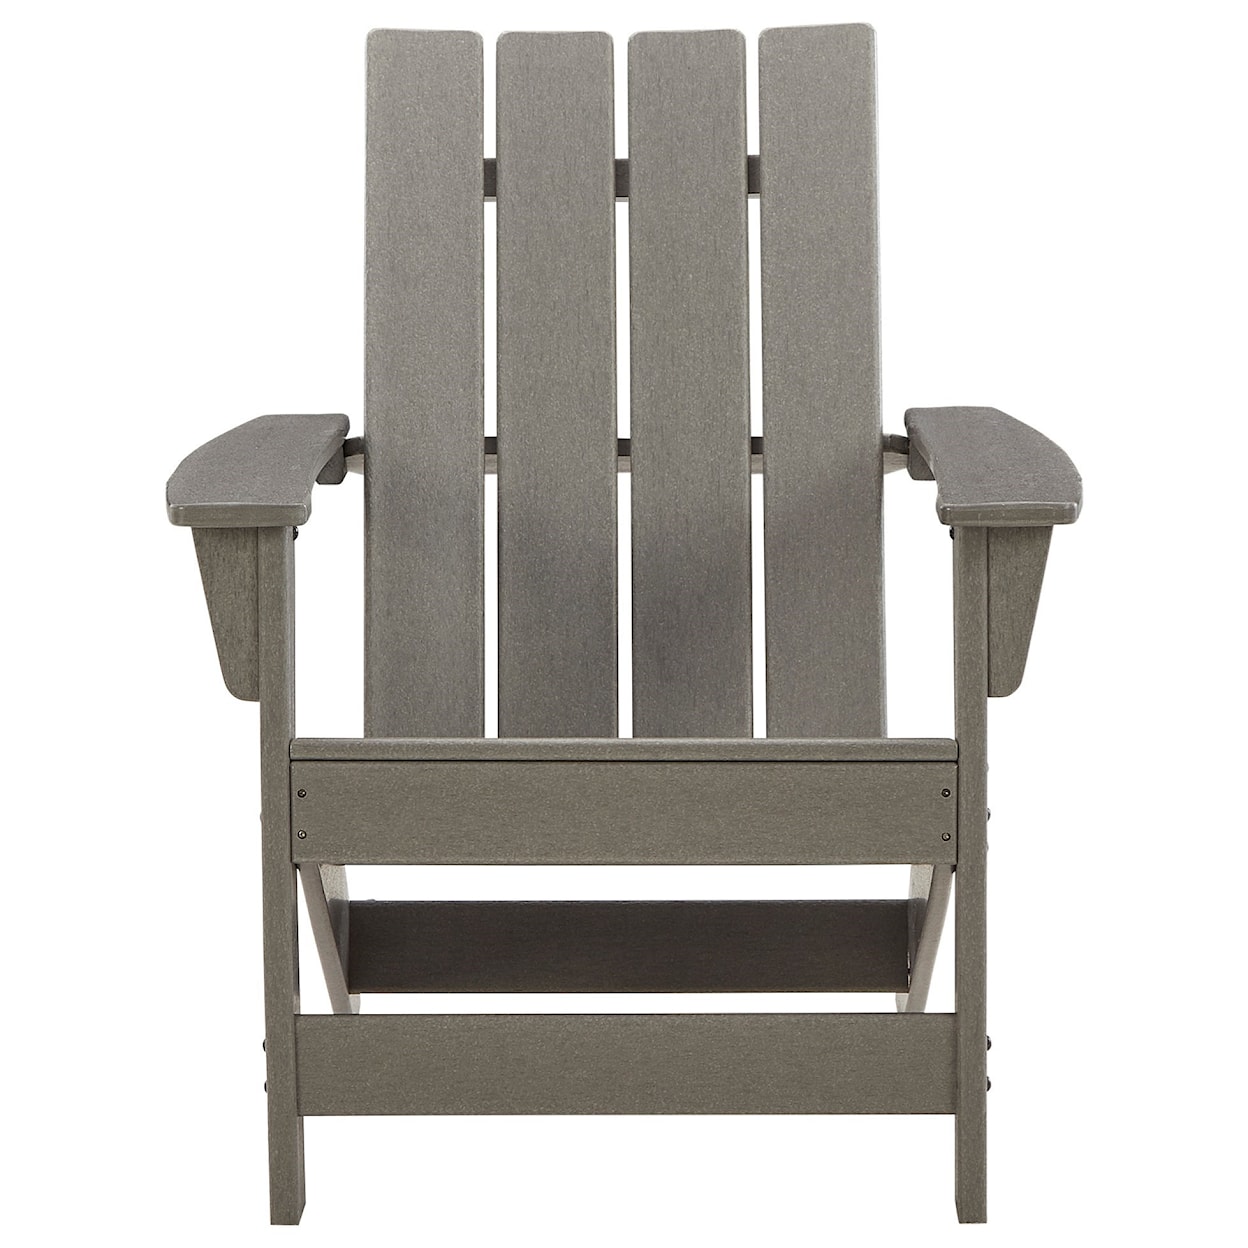 StyleLine Visola 3-Piece Adirondack Chairs and Table Set